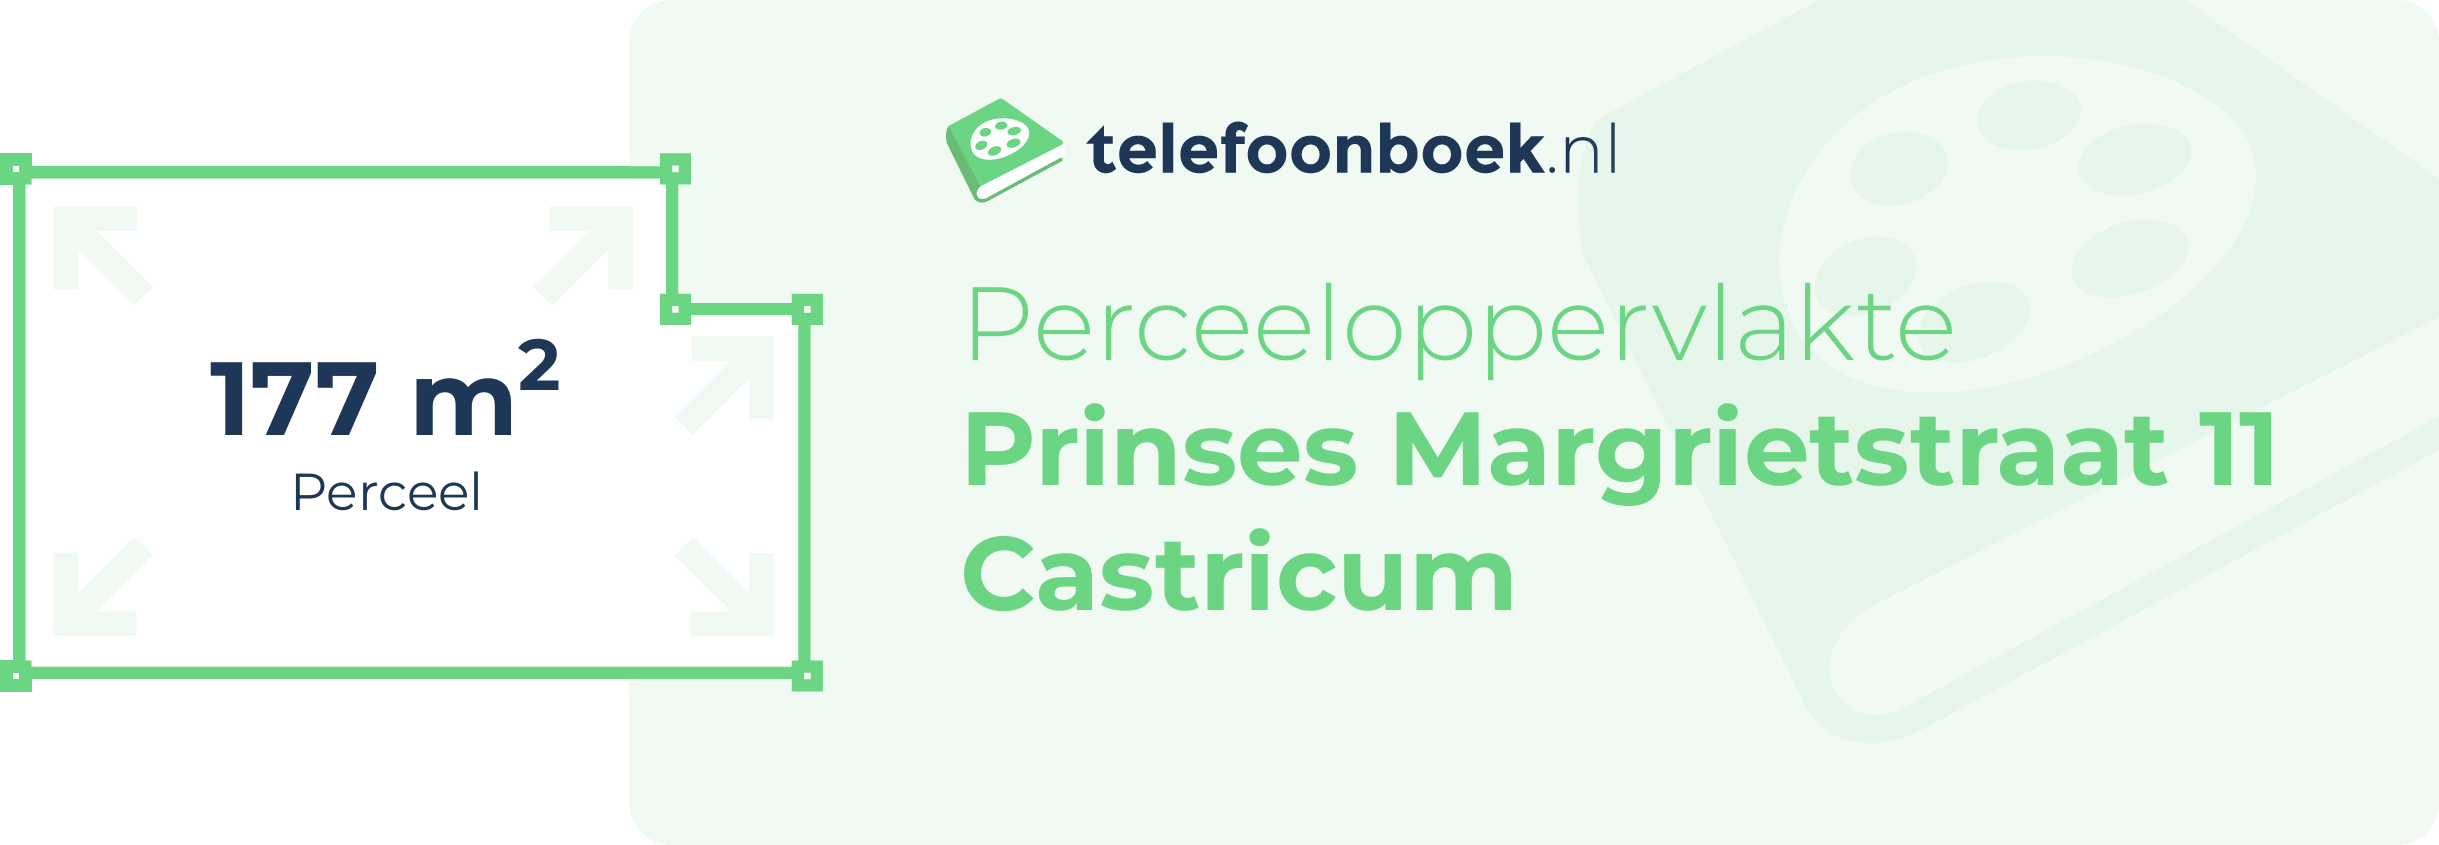 Perceeloppervlakte Prinses Margrietstraat 11 Castricum